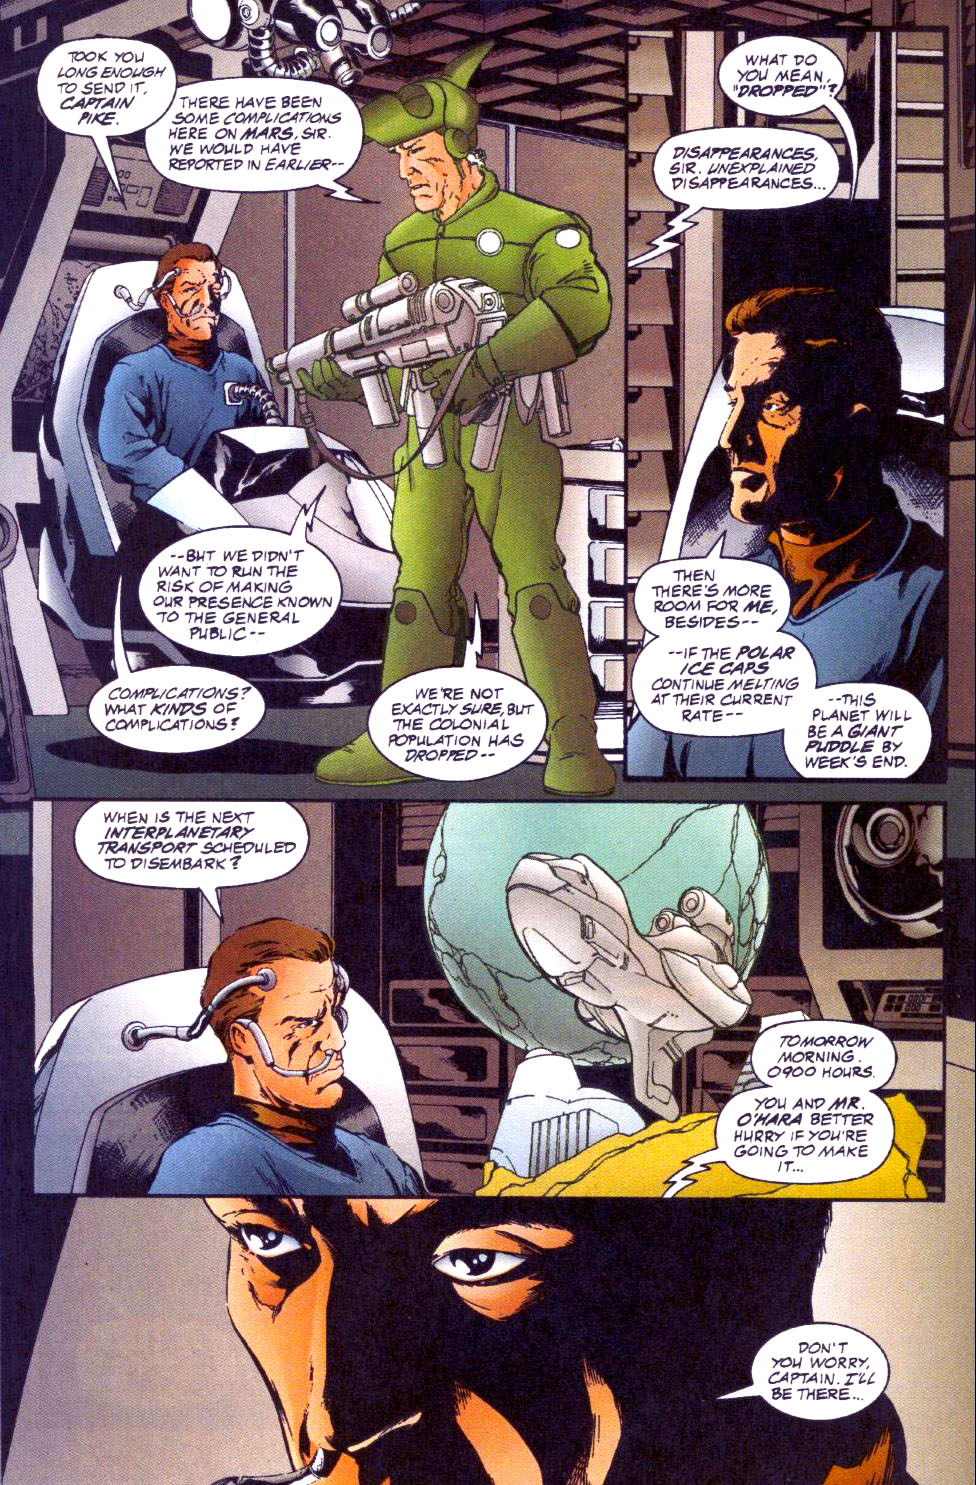 Spider-Man 2099 (1992) issue 45 - Page 13